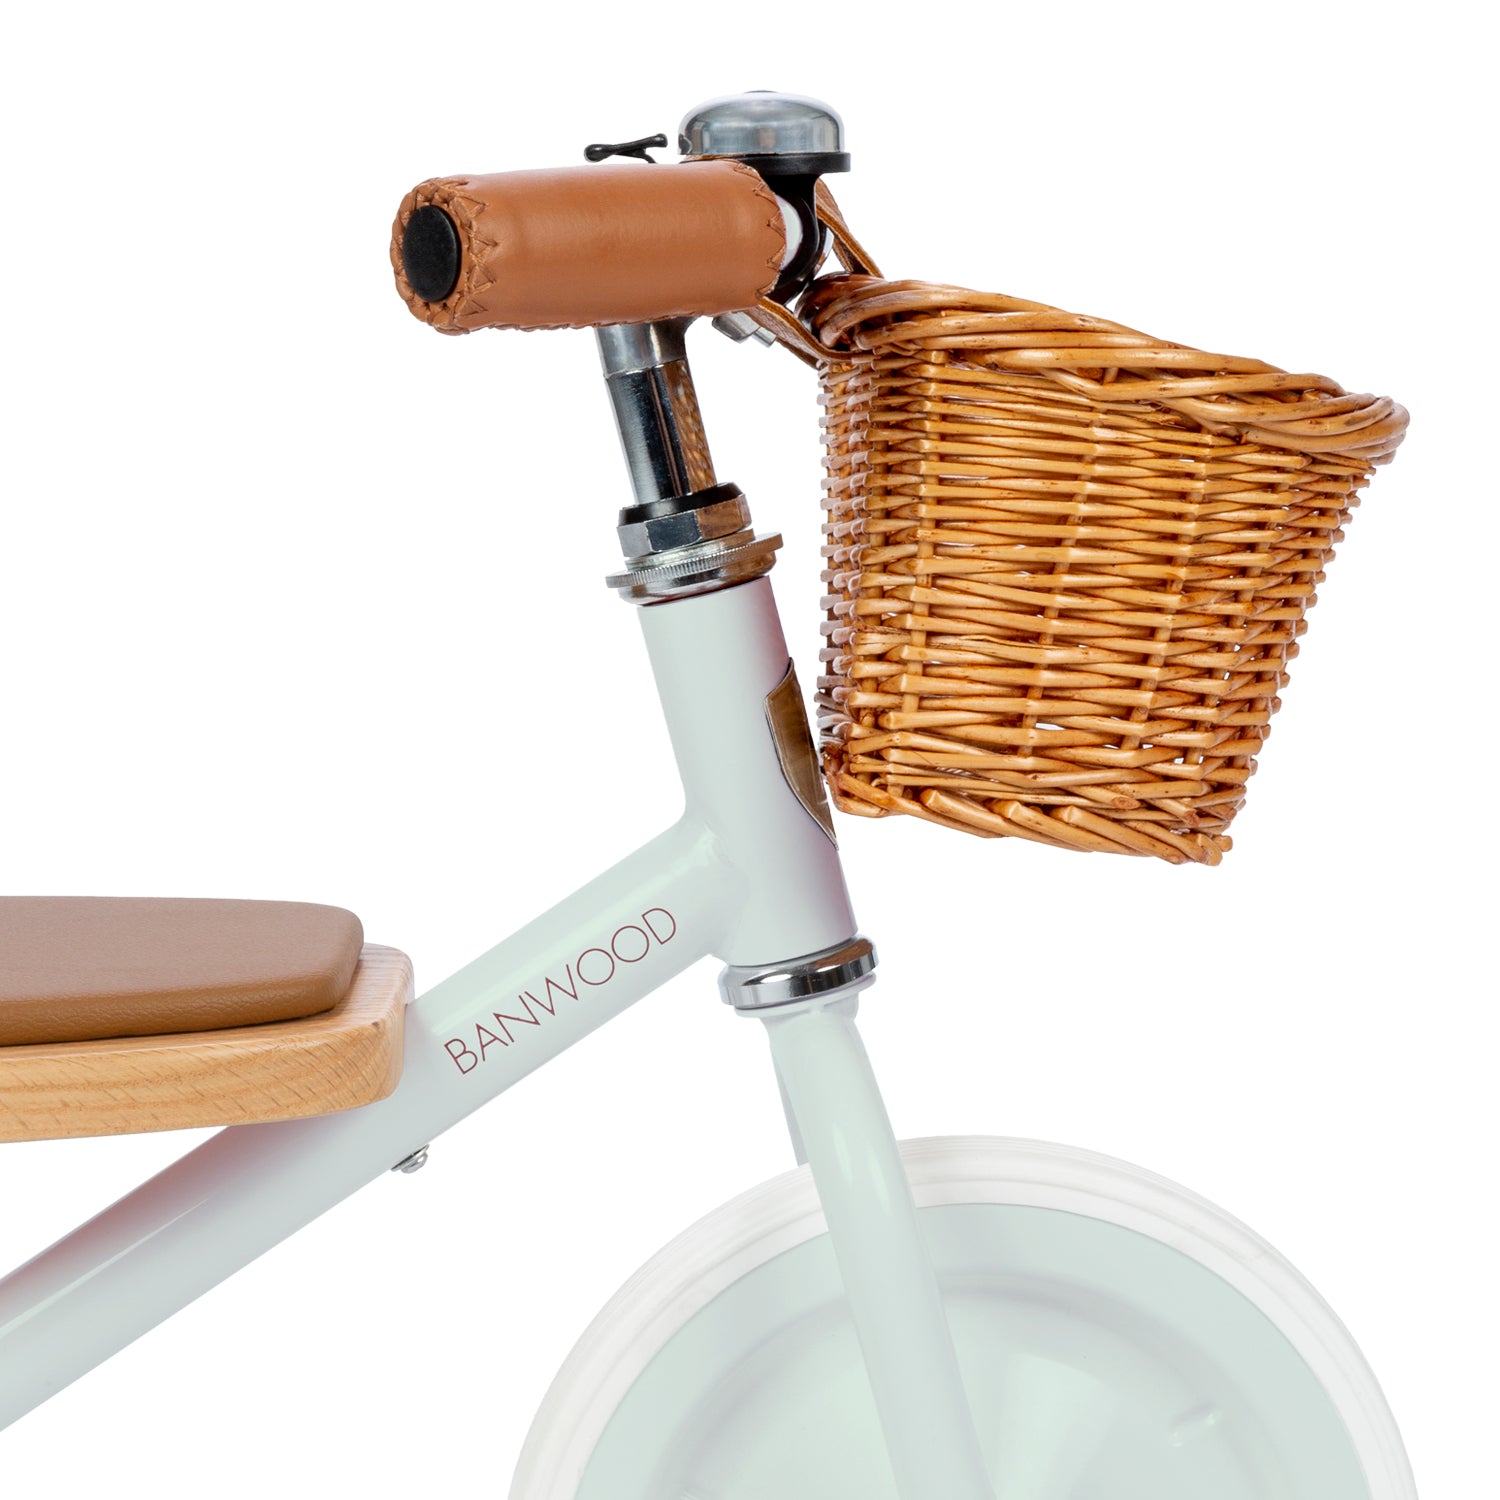 NEW Banwood Trike (and basket)- Mint